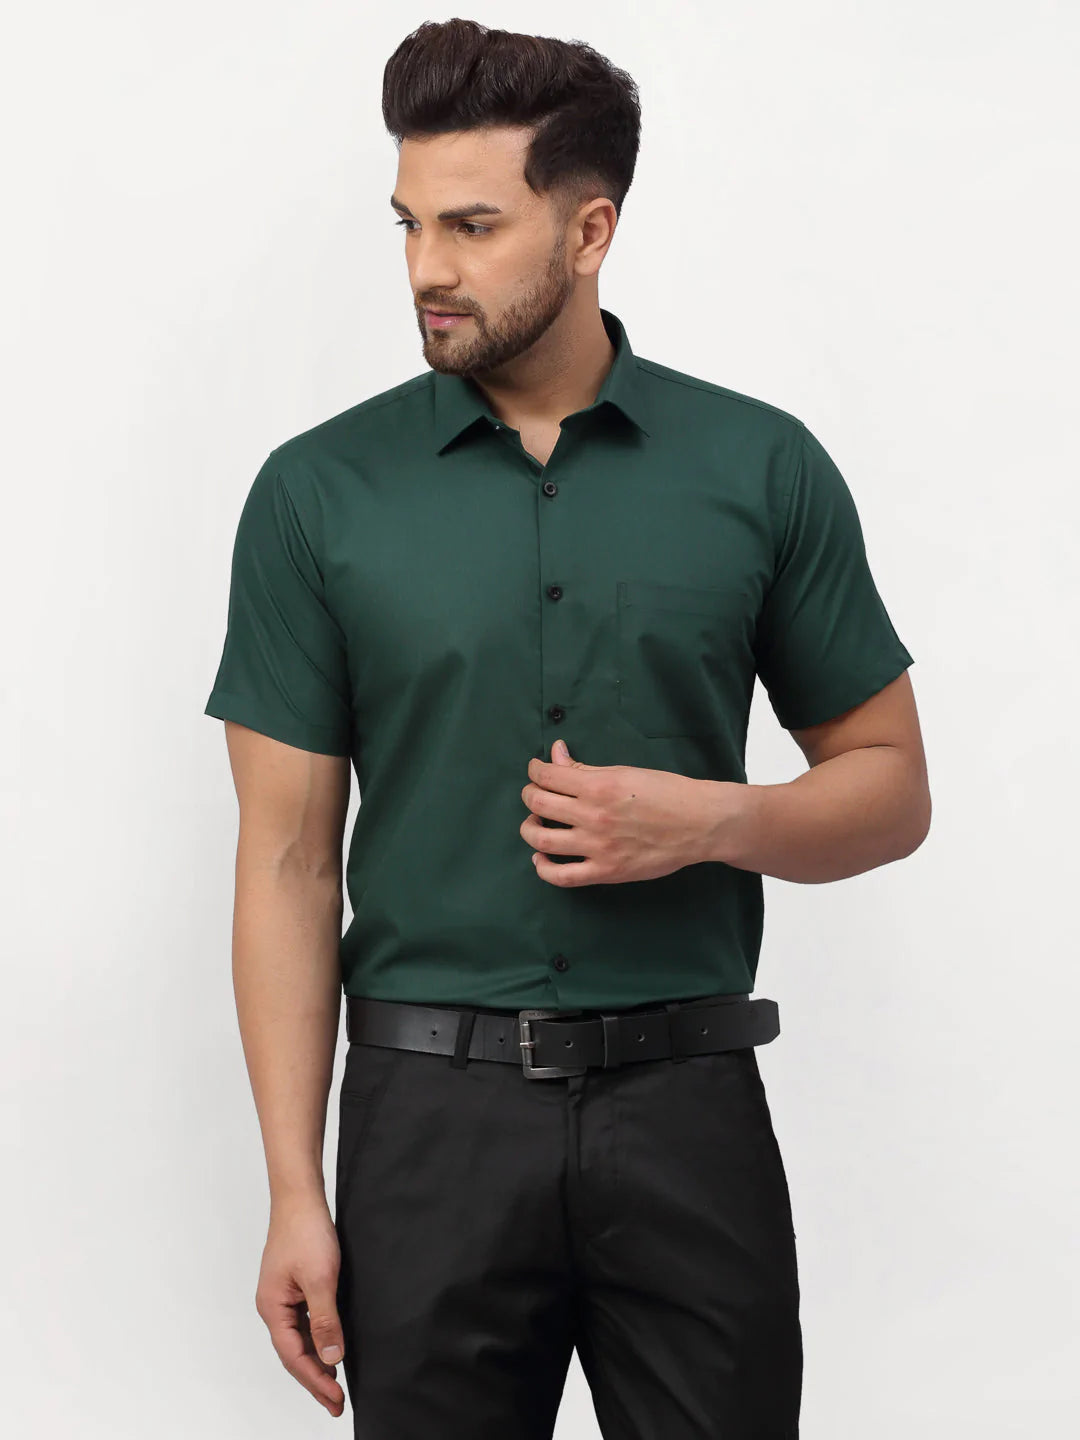 Jainish Olive Men's Cotton Half Sleeves Solid Formal Shirts ( SF 754Olive )